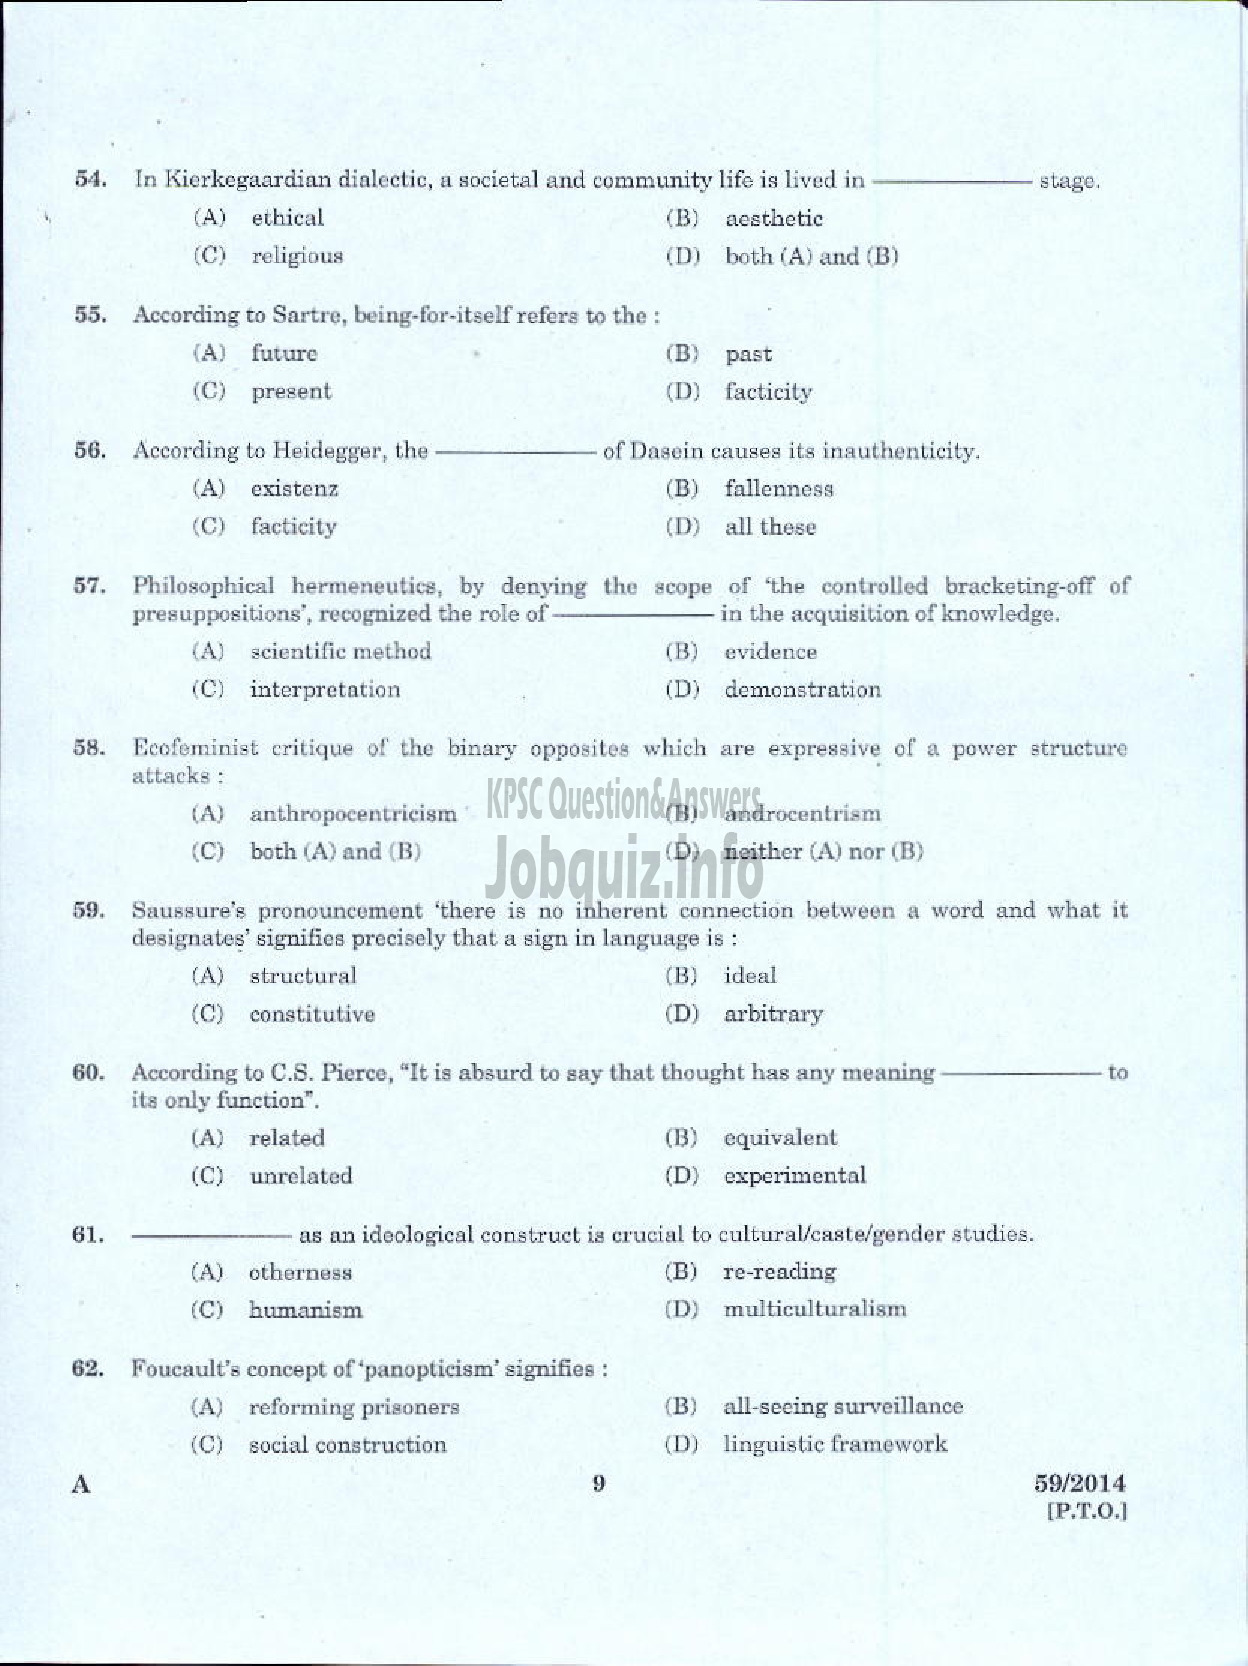 Kerala PSC Question Paper - LECTURER IN PHILOSOPHY KERALA COLLEGIATE EDUCATION-7